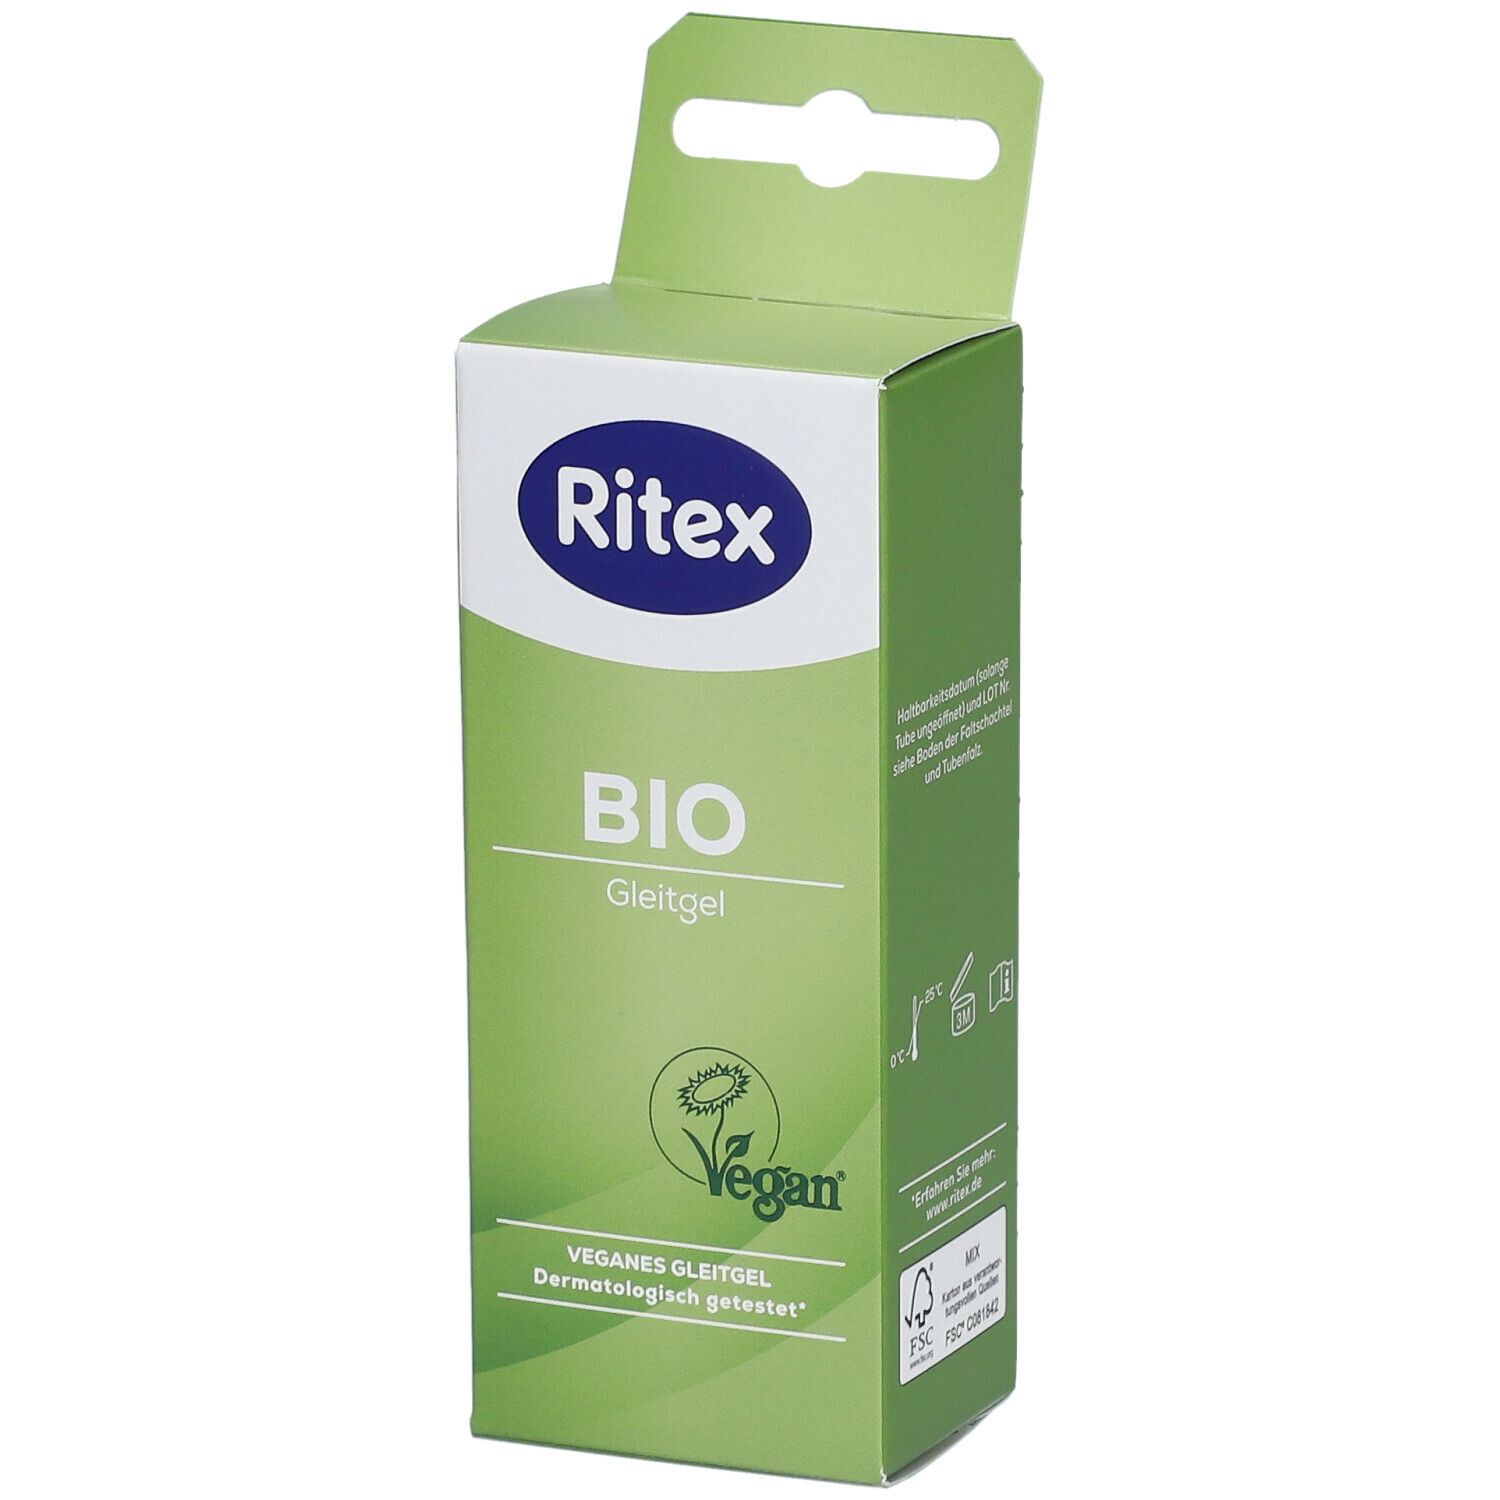 Ritex BIO Gleitgel 50 ml - SHOP APOTHEKE